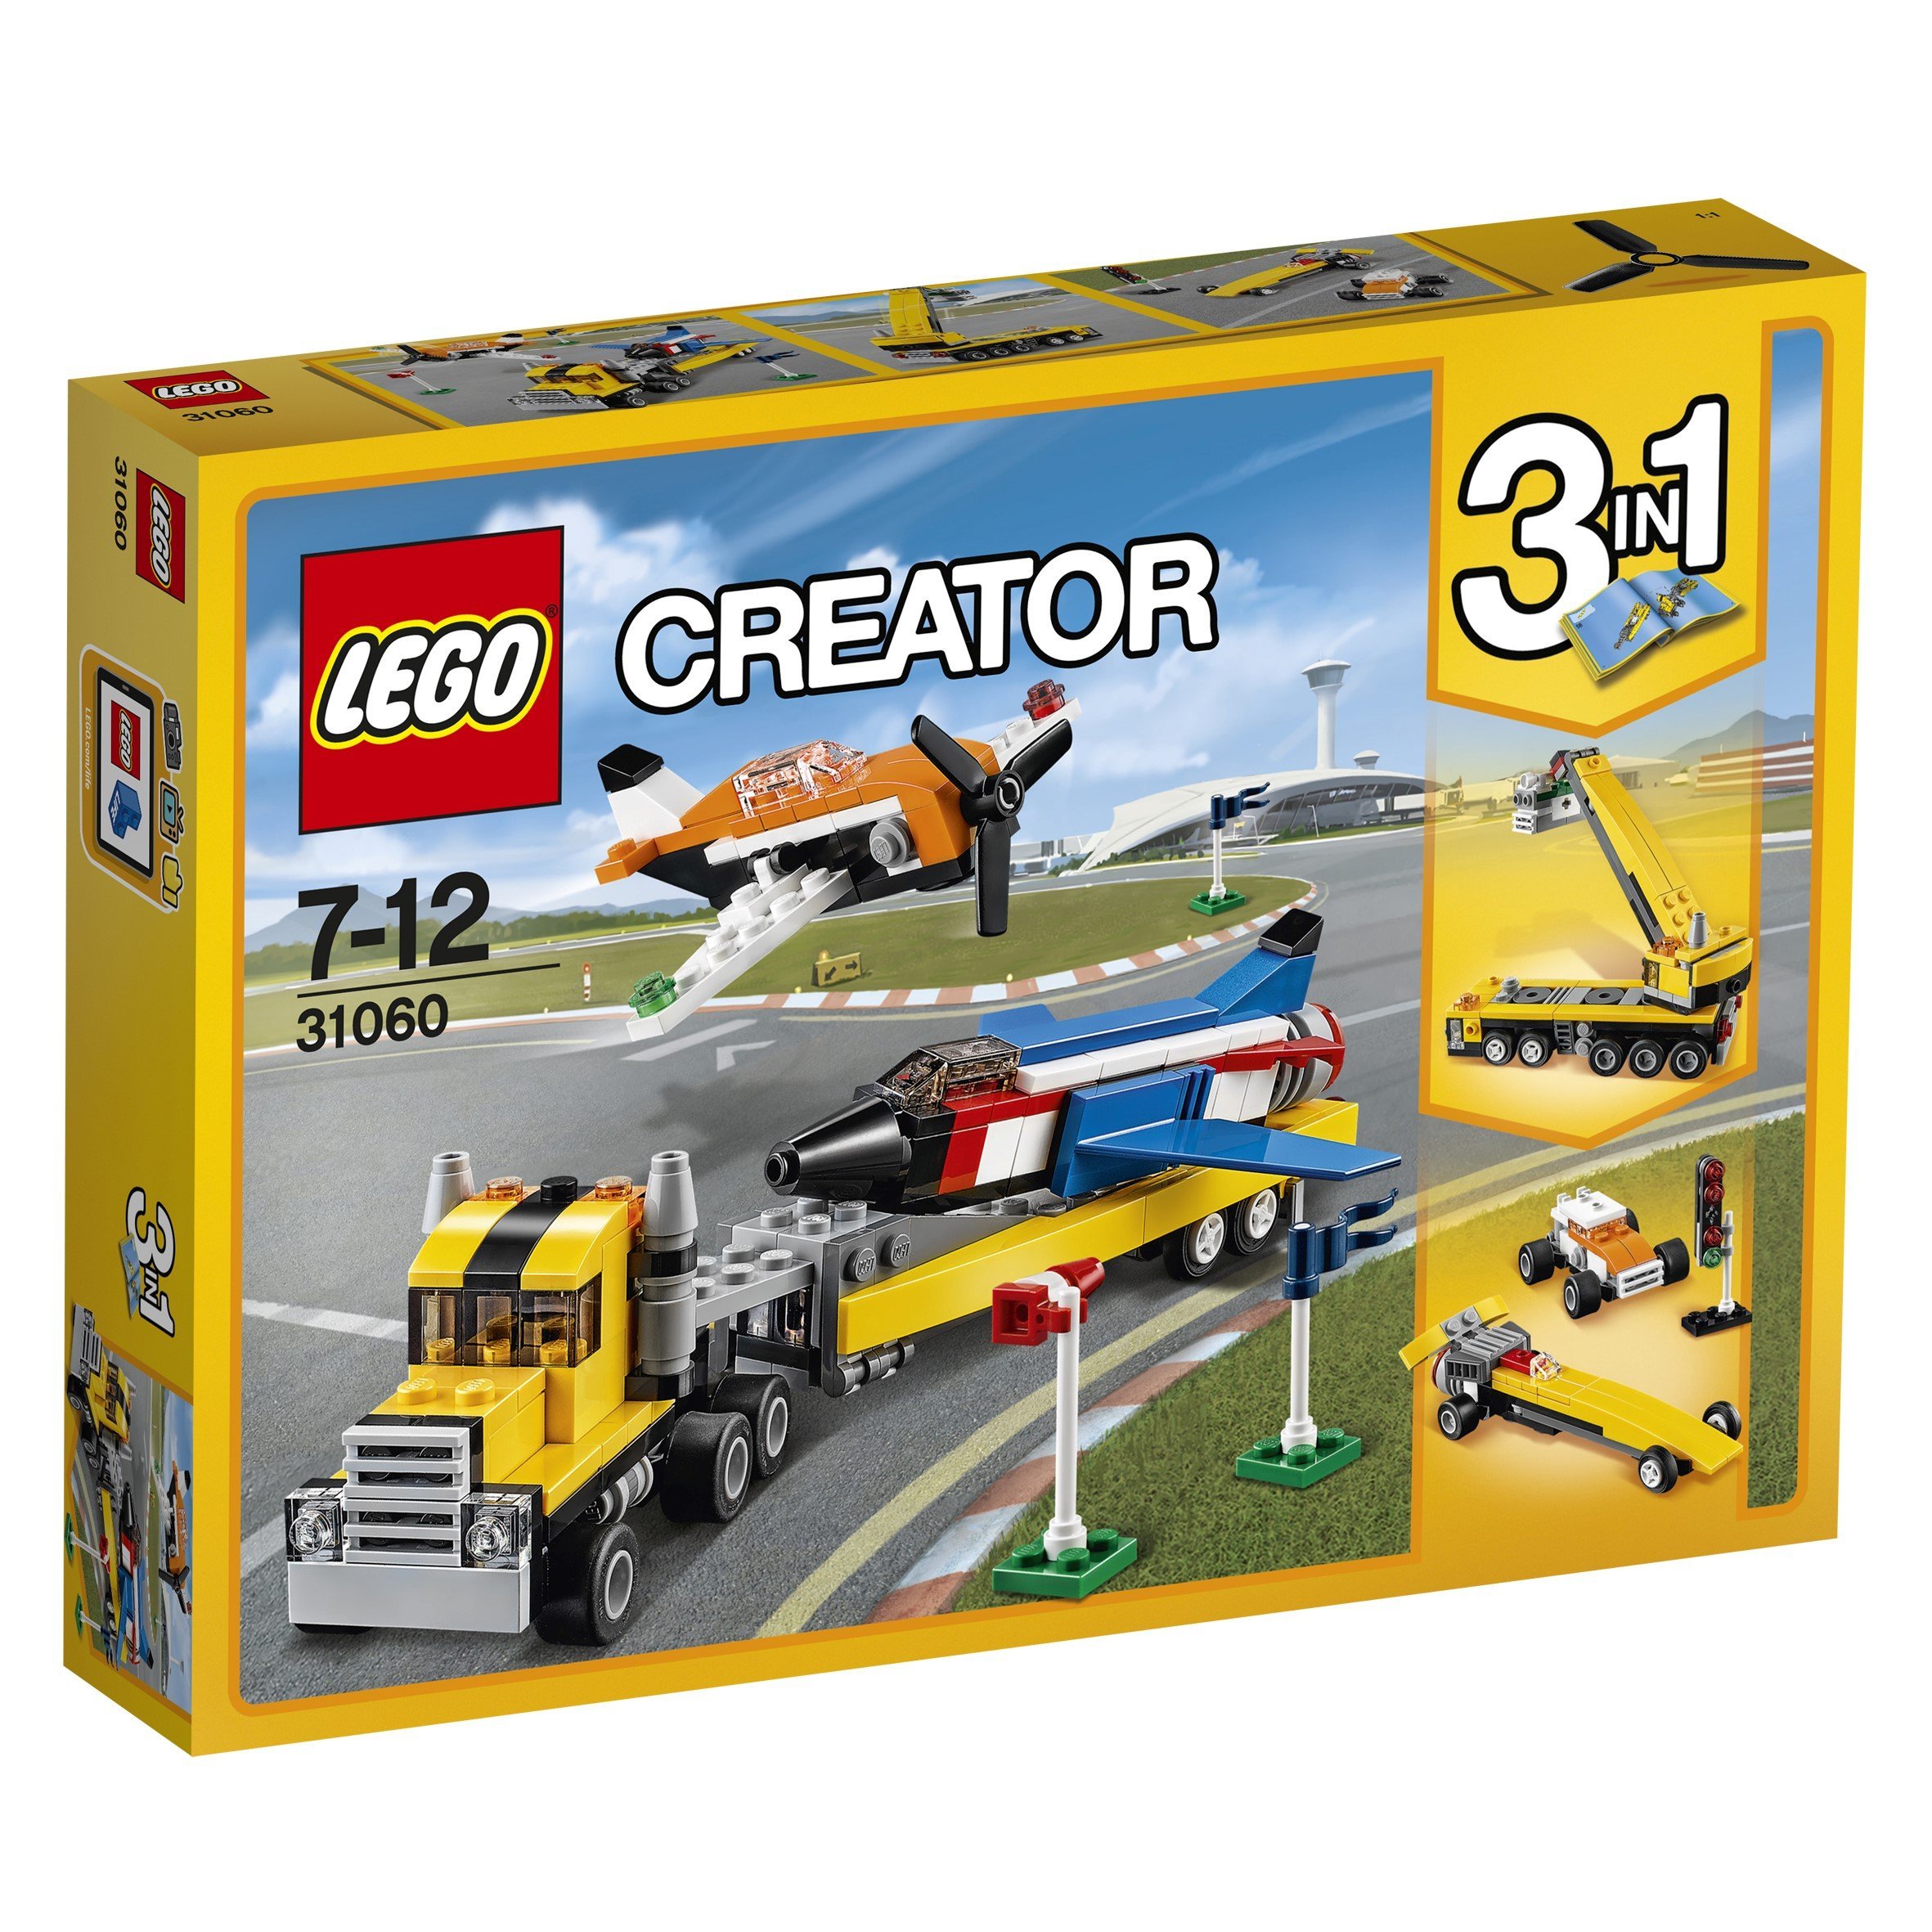 Lego Creator Flight Display Attractions